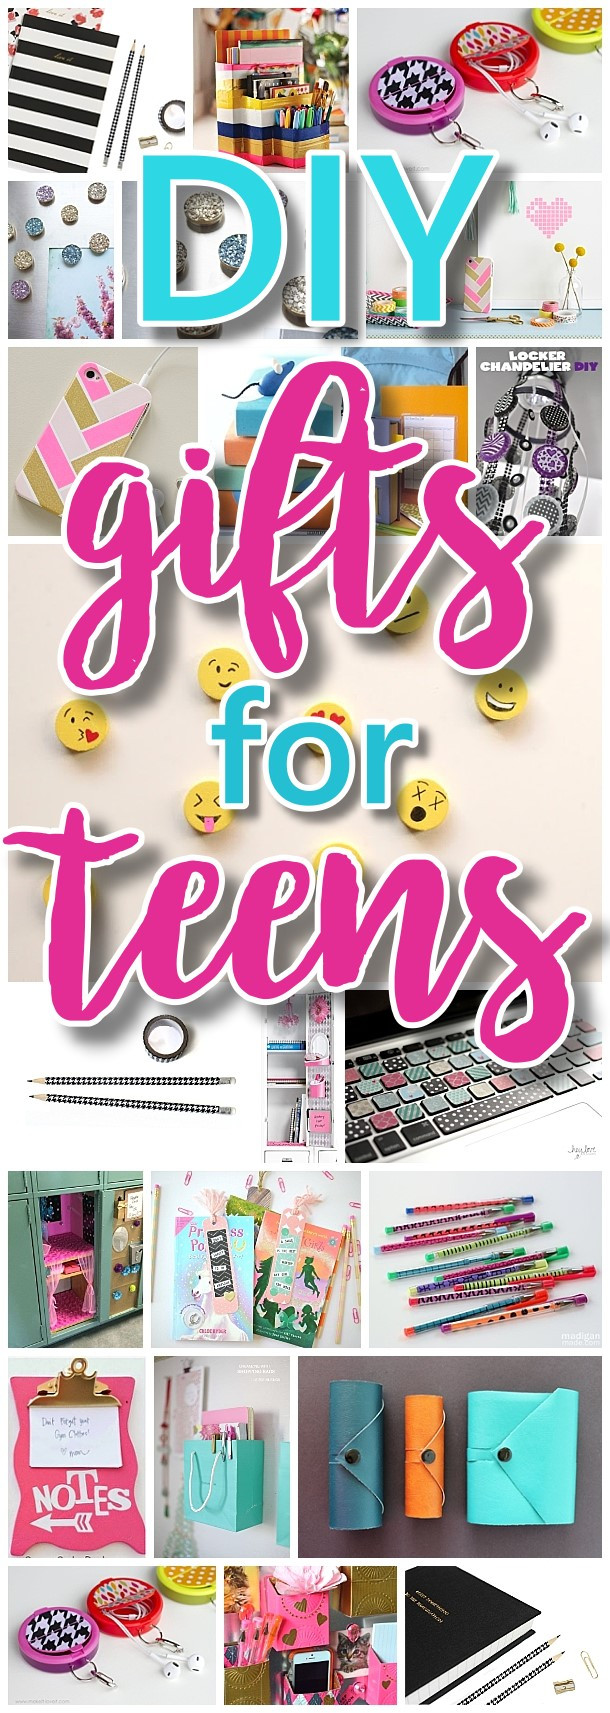 DIY Gifts For Tweens
 The BEST DIY Gifts for Teens Tweens and Best Friends